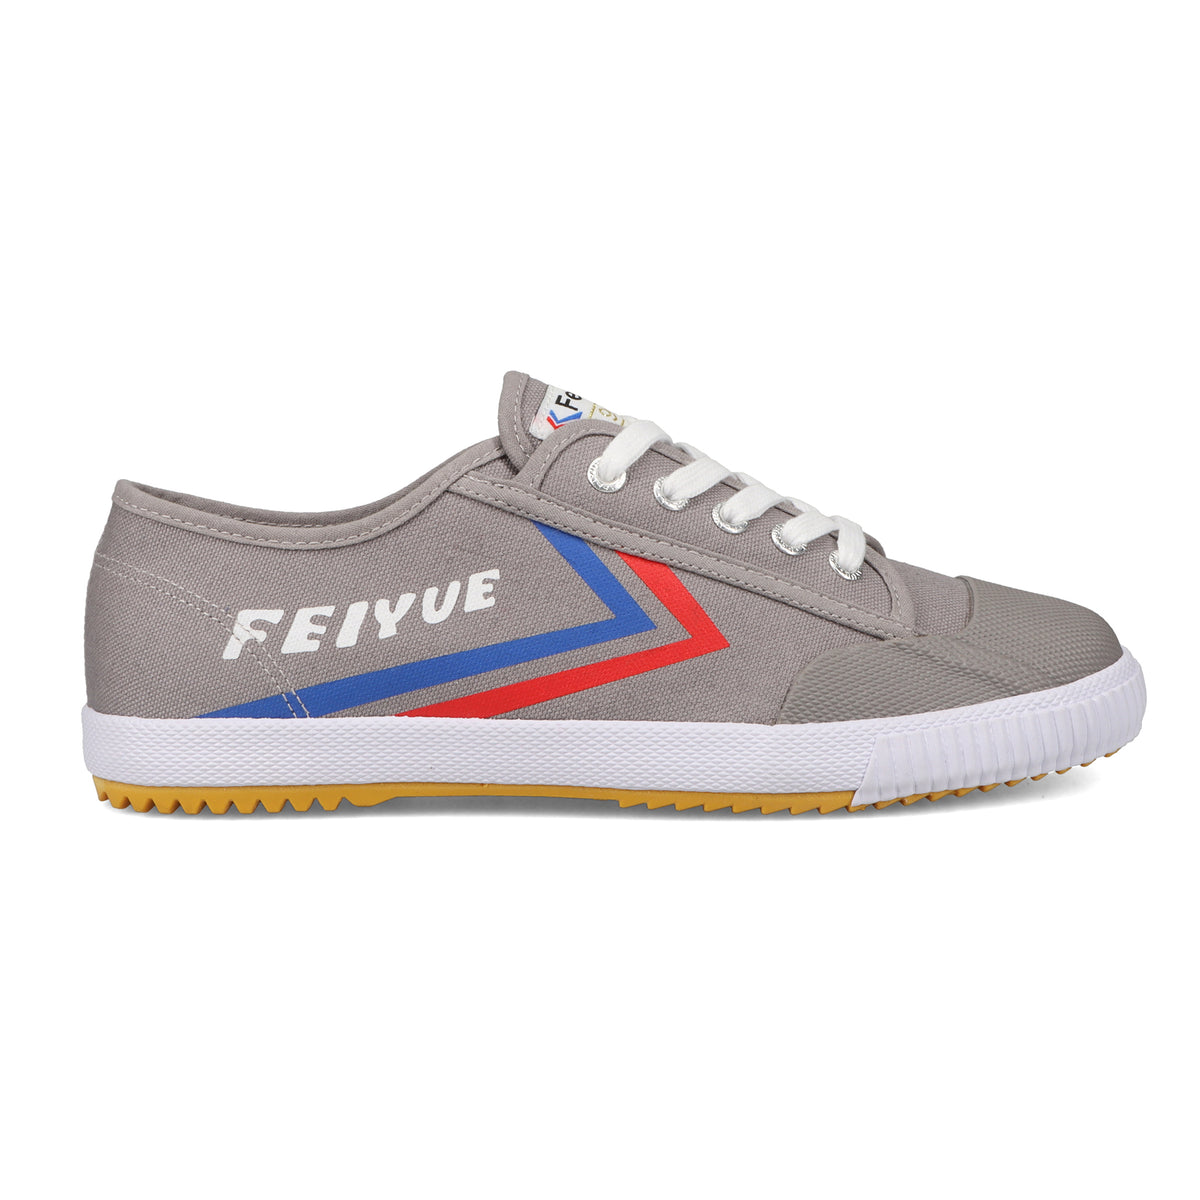 Fe Lo 1920 | Men | White | Feiyue Shoes 9M / White